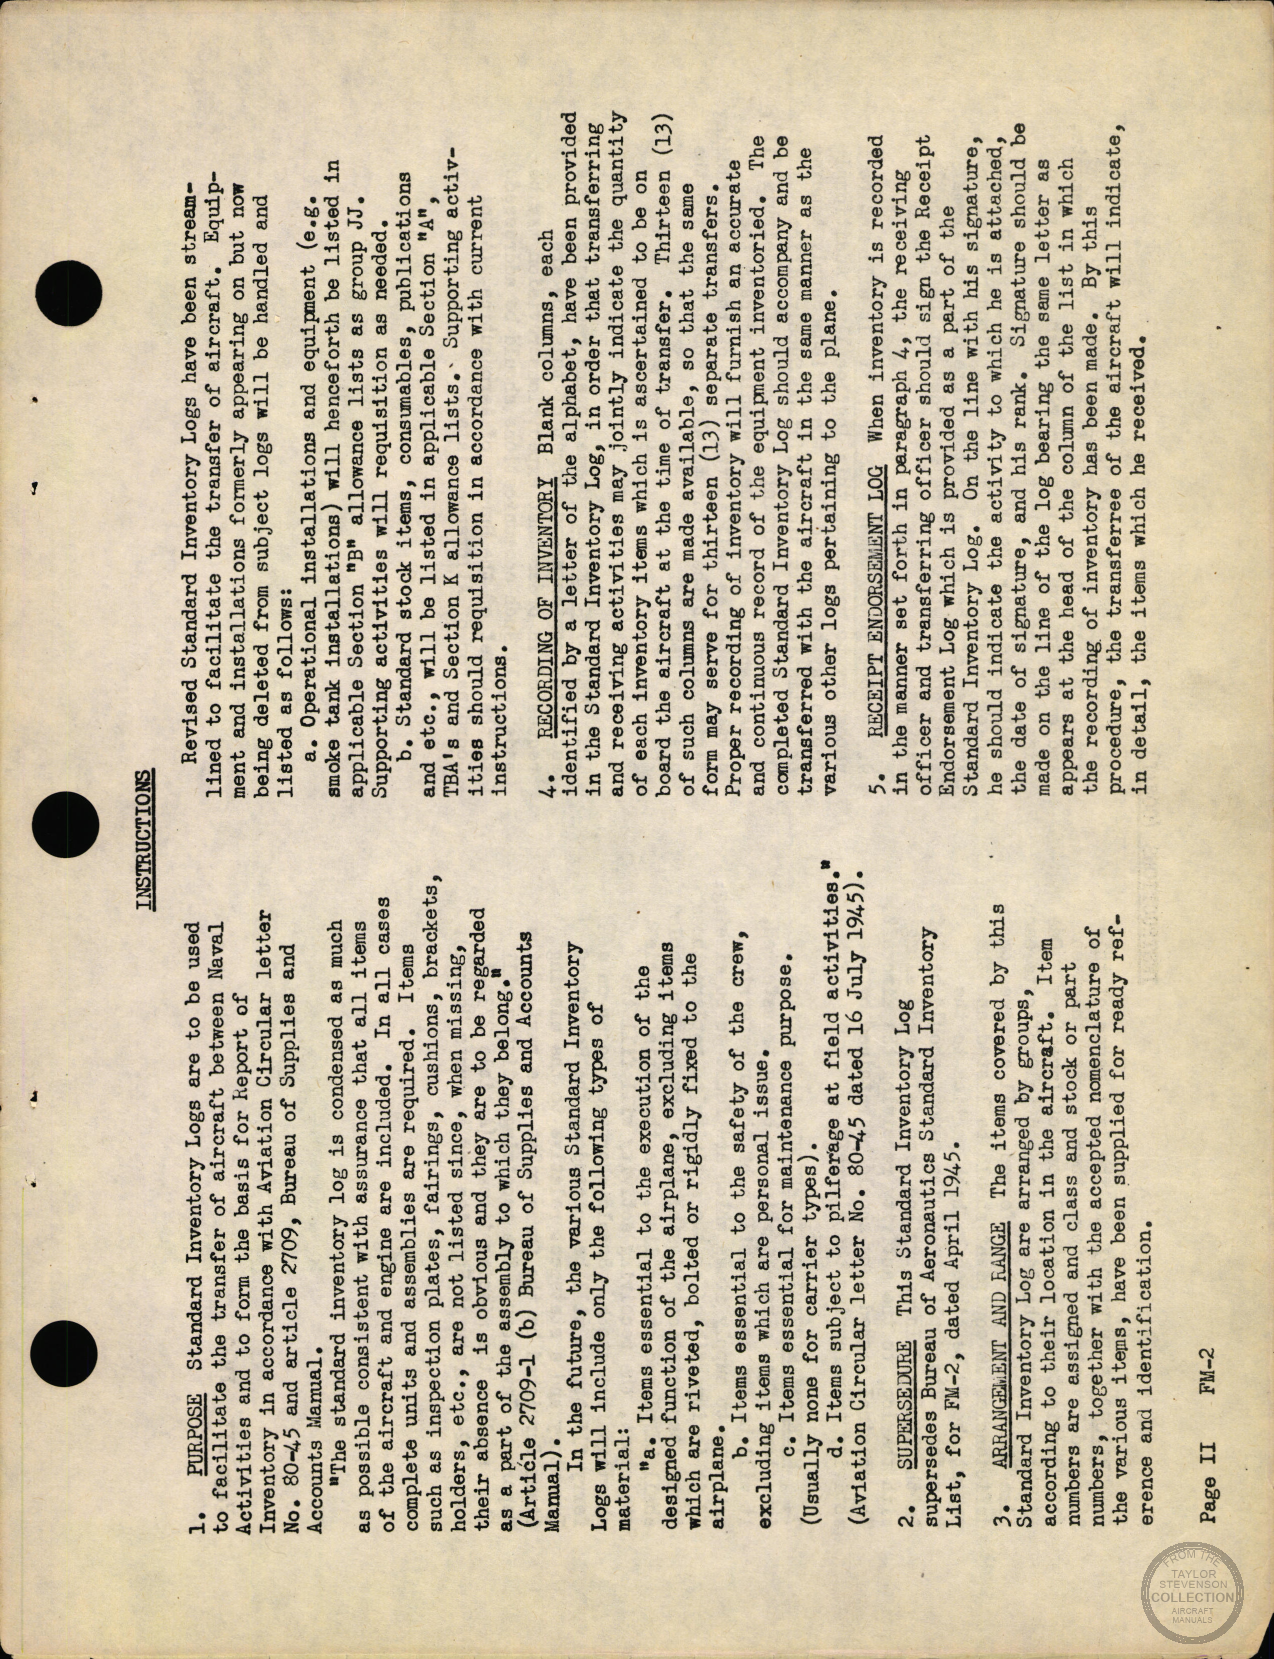 Sample page 3 from AirCorps Library document: Bureau of Aeronautics Standard Inventory Log set (2), FM-2 Wildcat